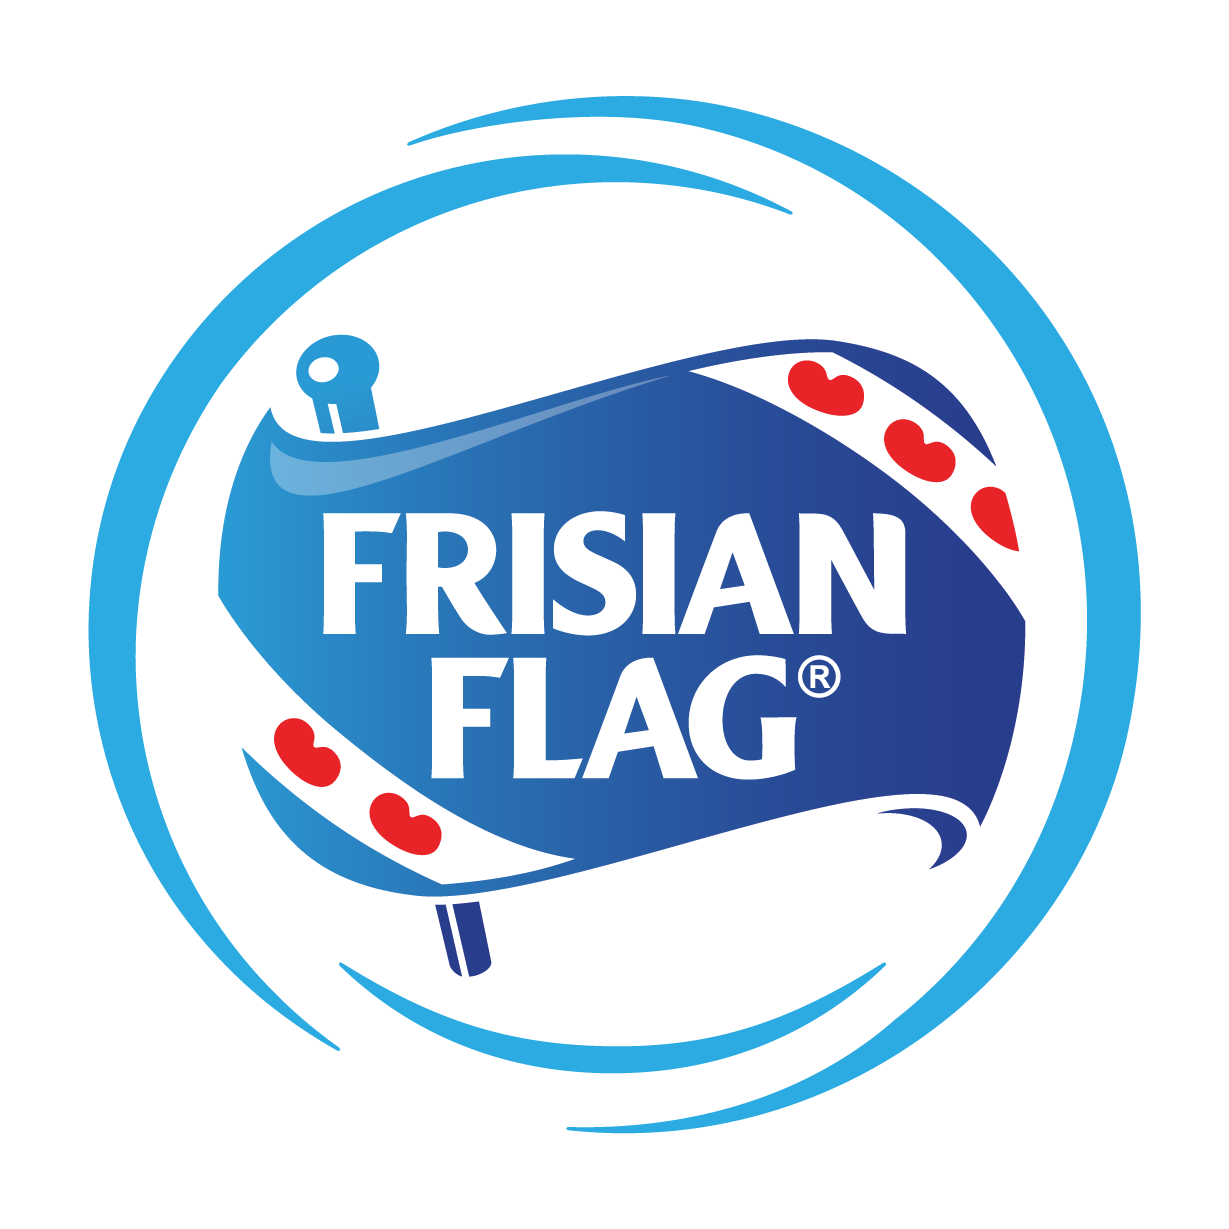 Frisian Flag - Wikipedia bahasa Indonesia, ensiklopedia bebas